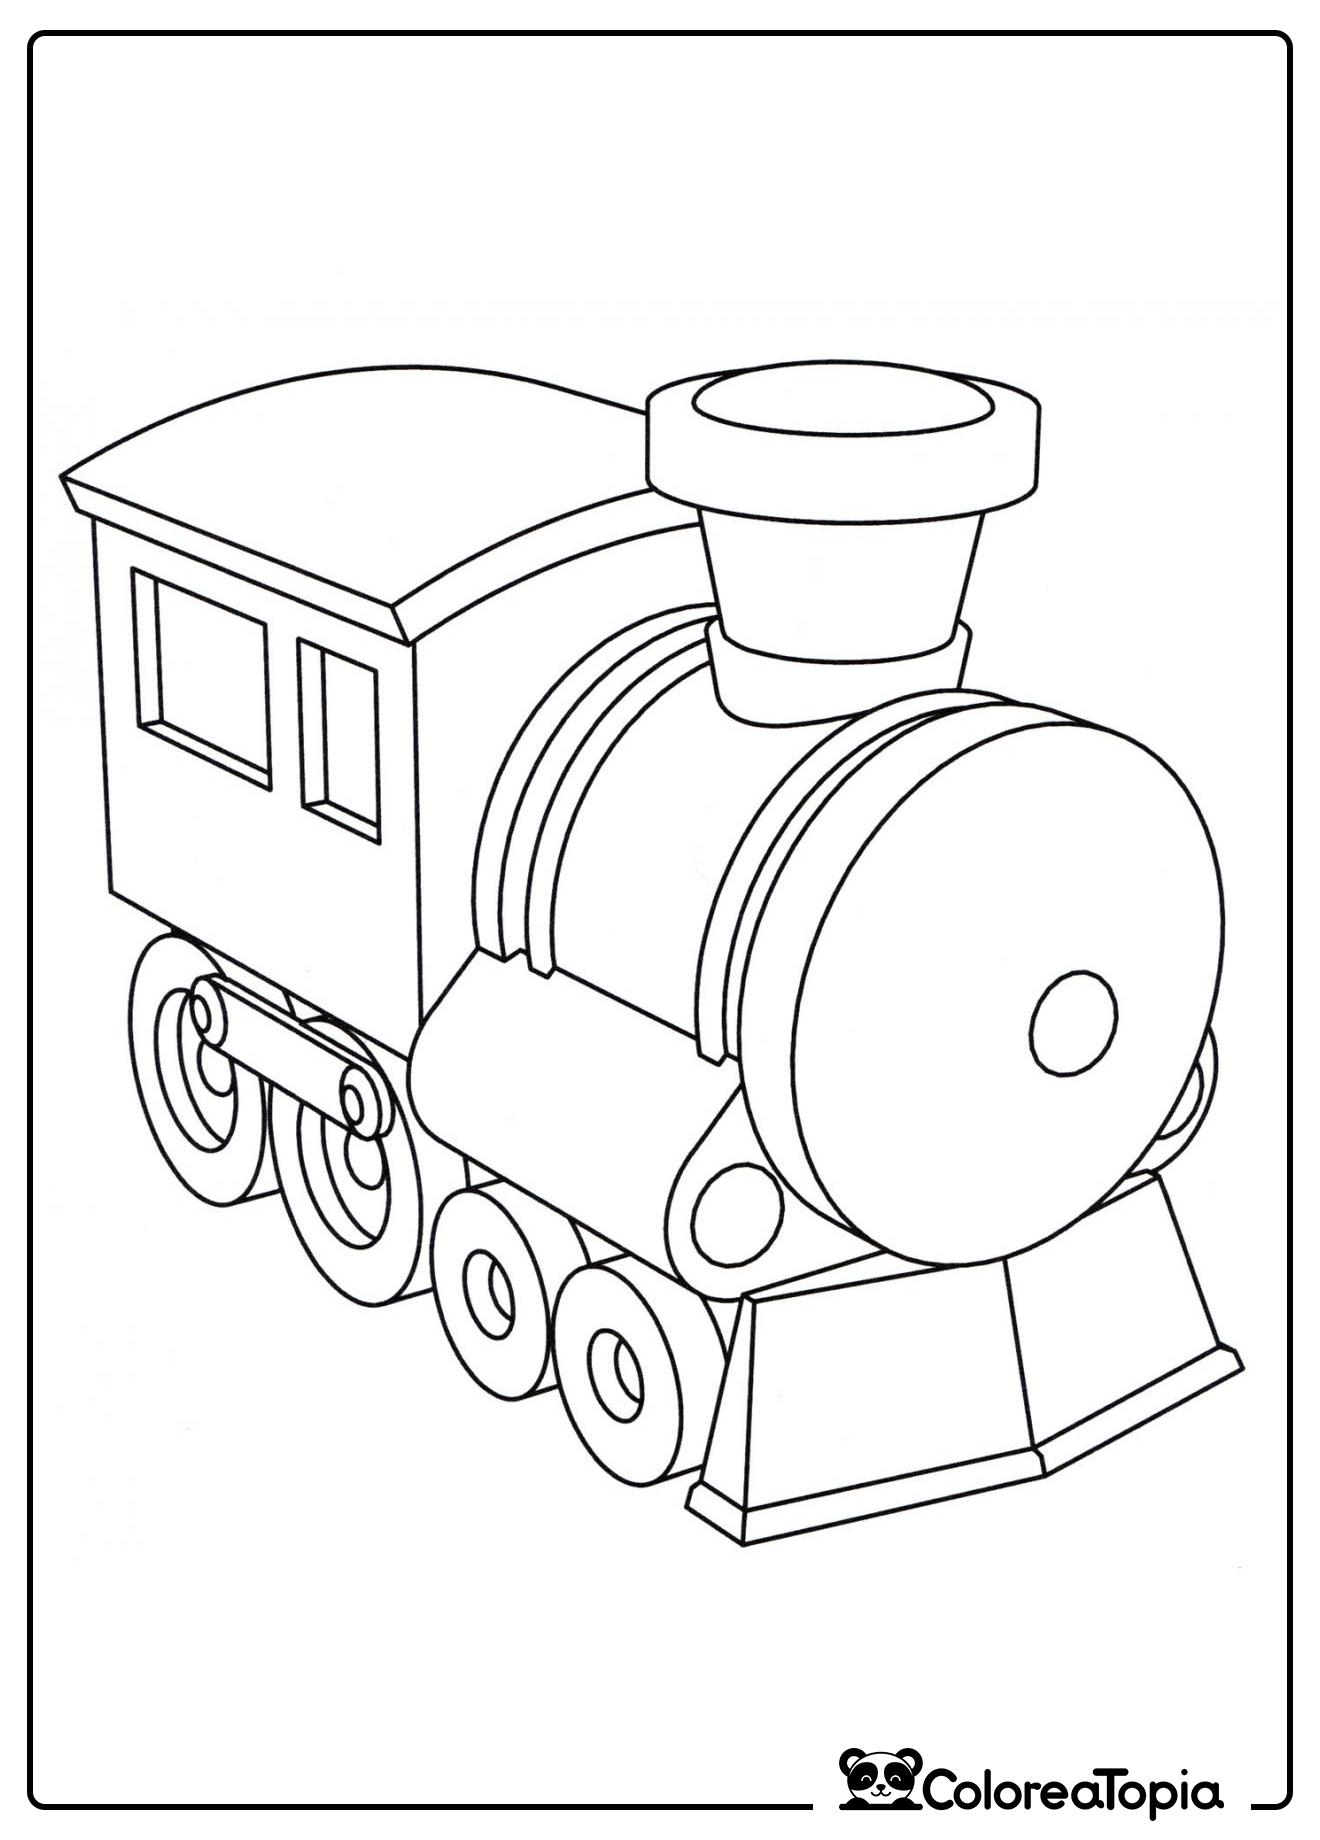 Tren de juguete - dibujo para colorear